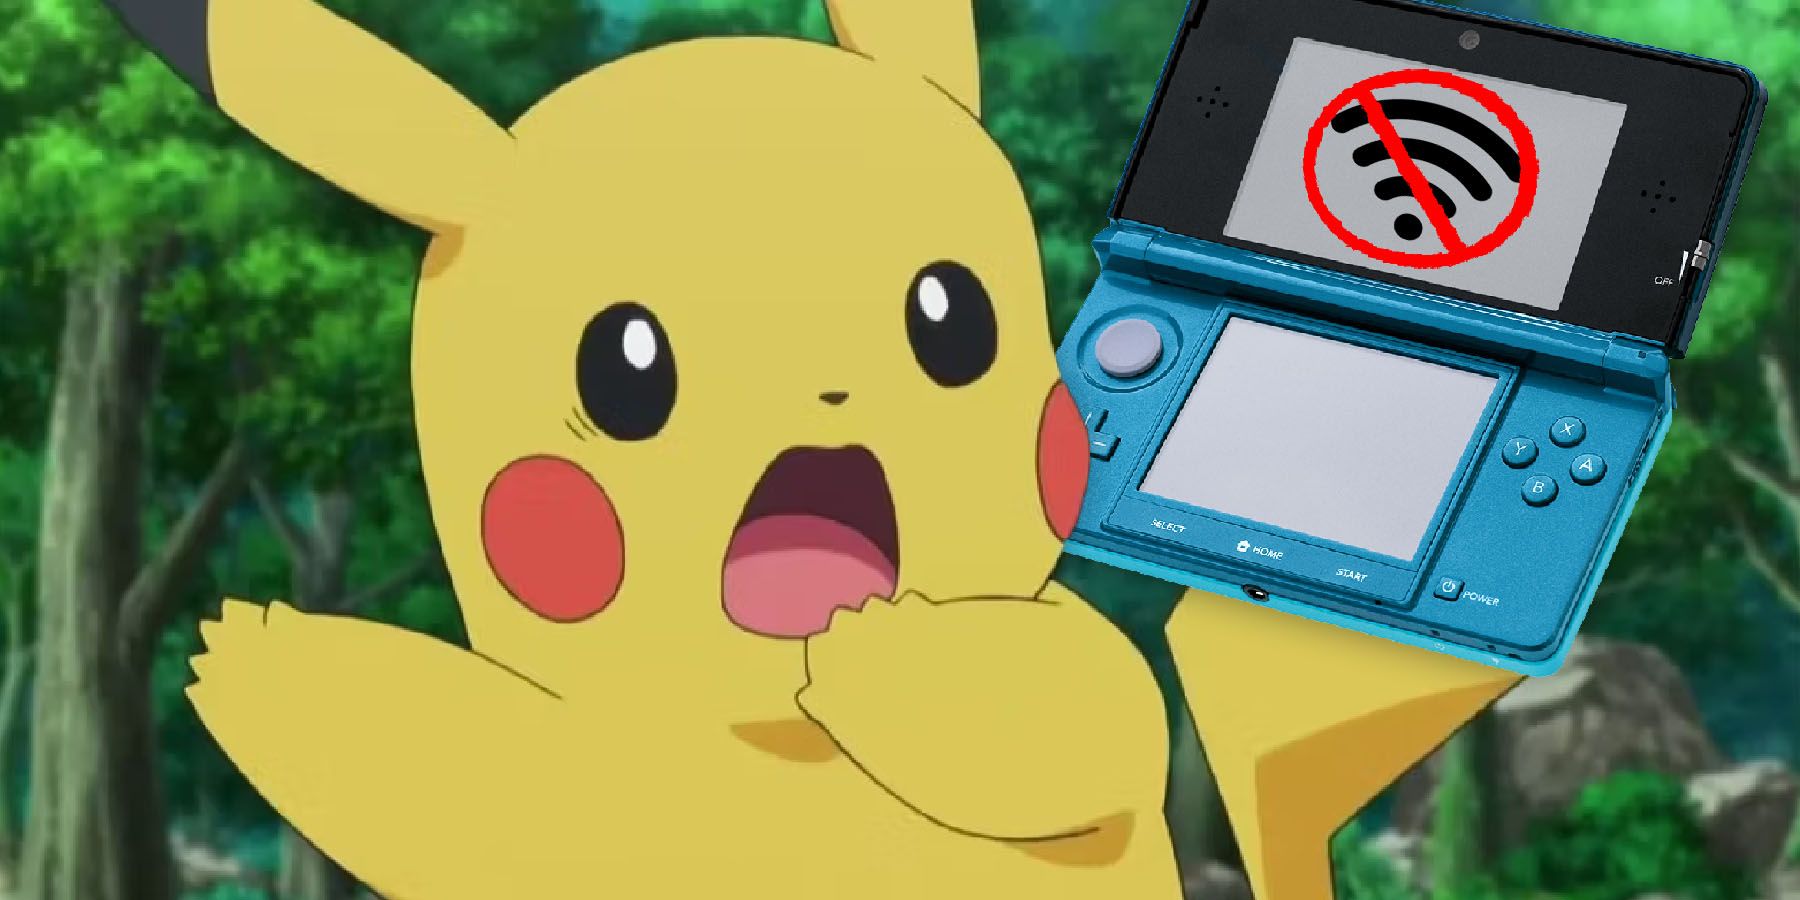 pokemon-pikachu-3ds-online-shutdown